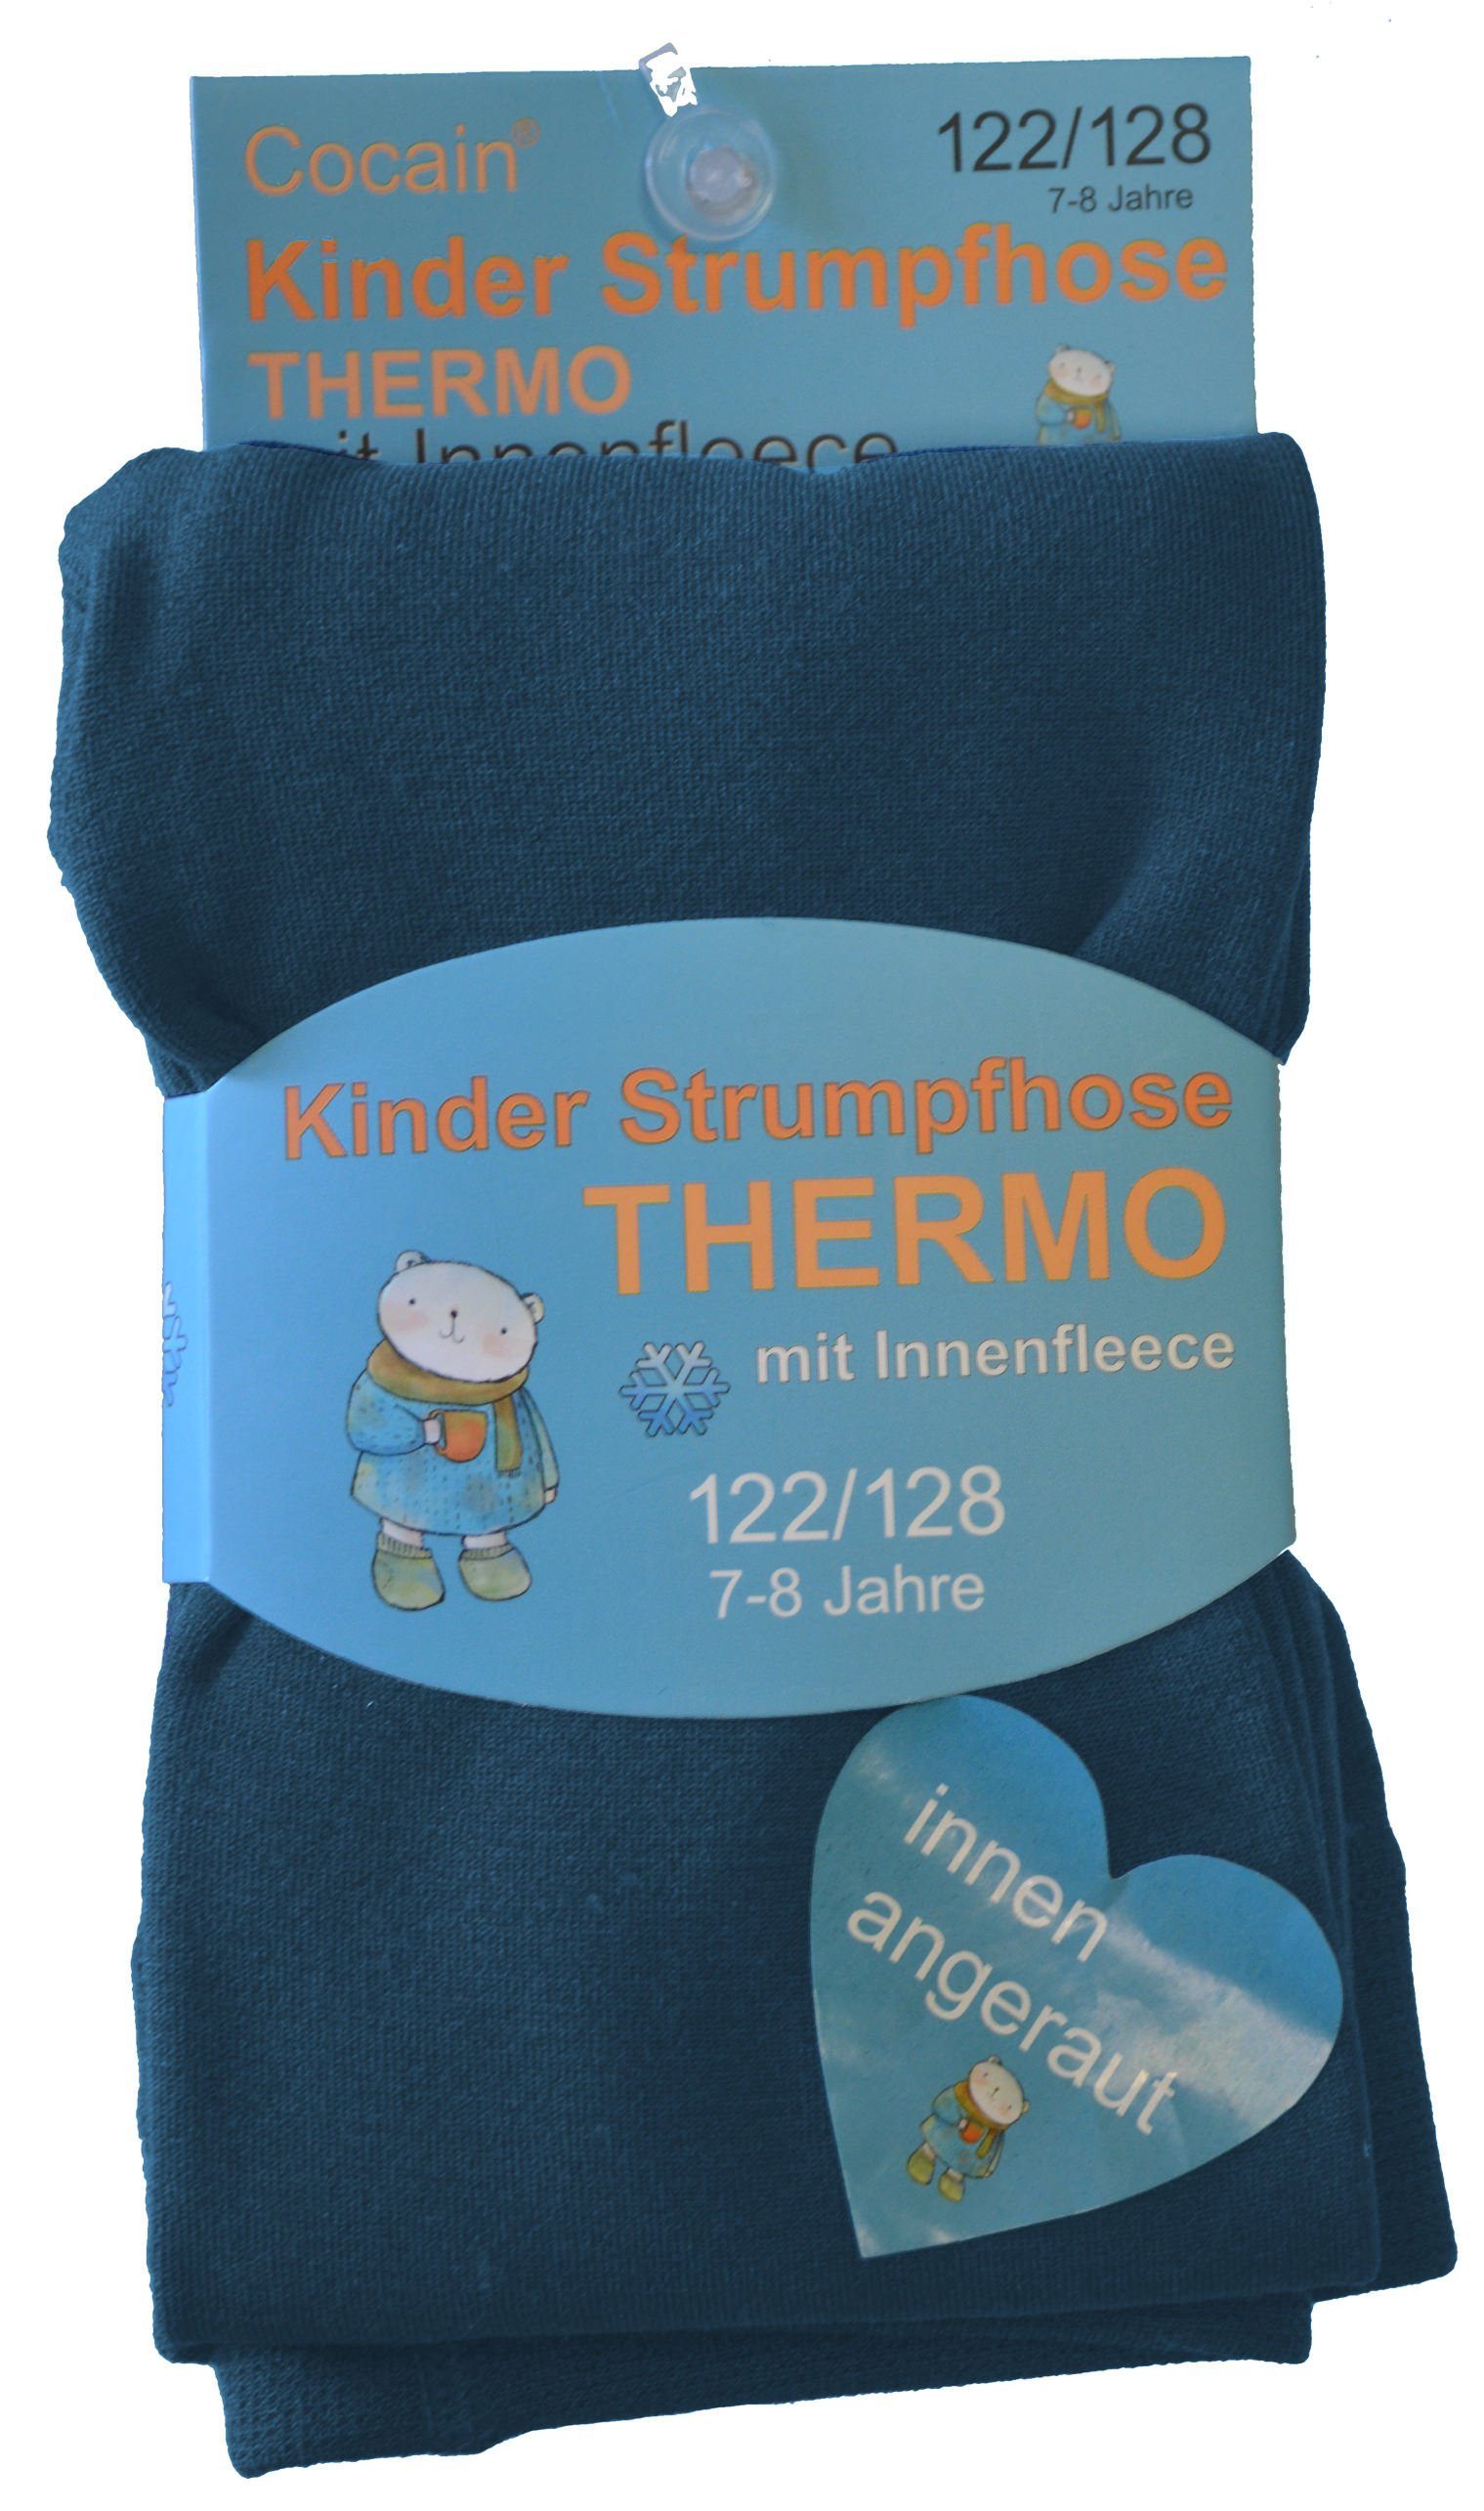 Innenfleece Vollfrottee Thermo Strumpfhosen Thermostrumpfhose underwear (2 petrol Cocain Kinder St)